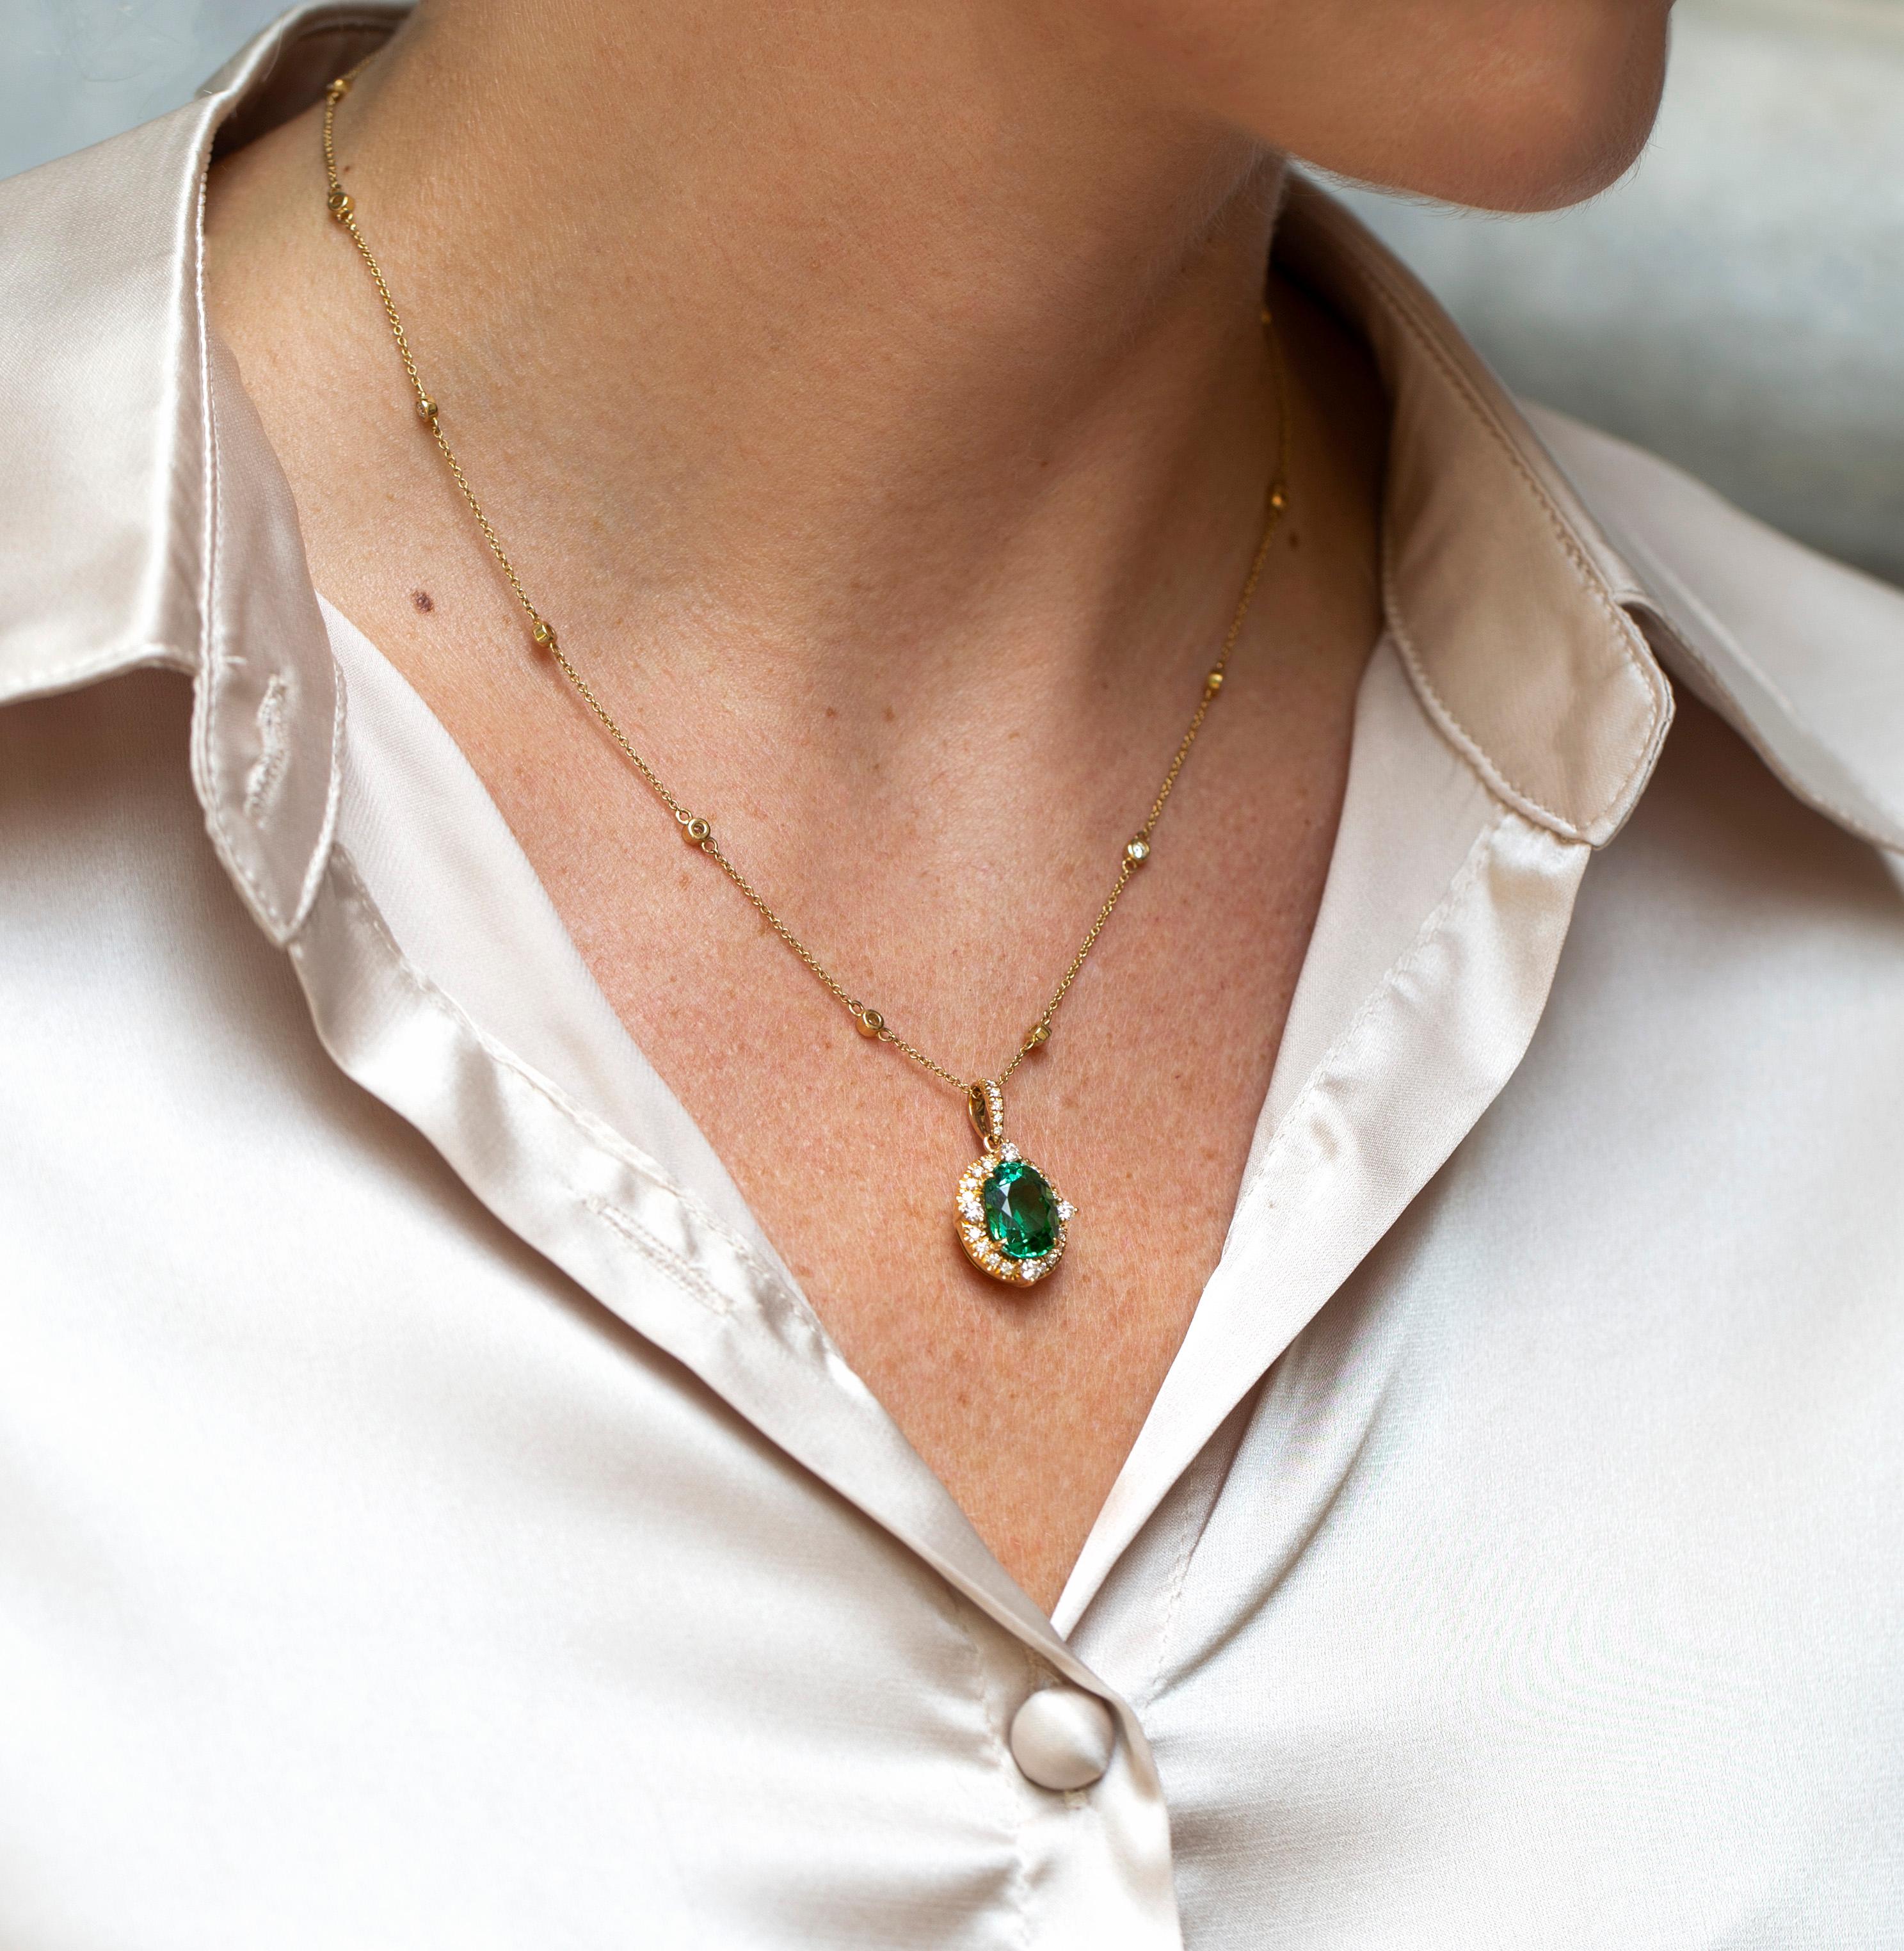 Women's 4.92 Carat Oval Cut Green Tourmaline and Diamond Pendant Necklace For Sale